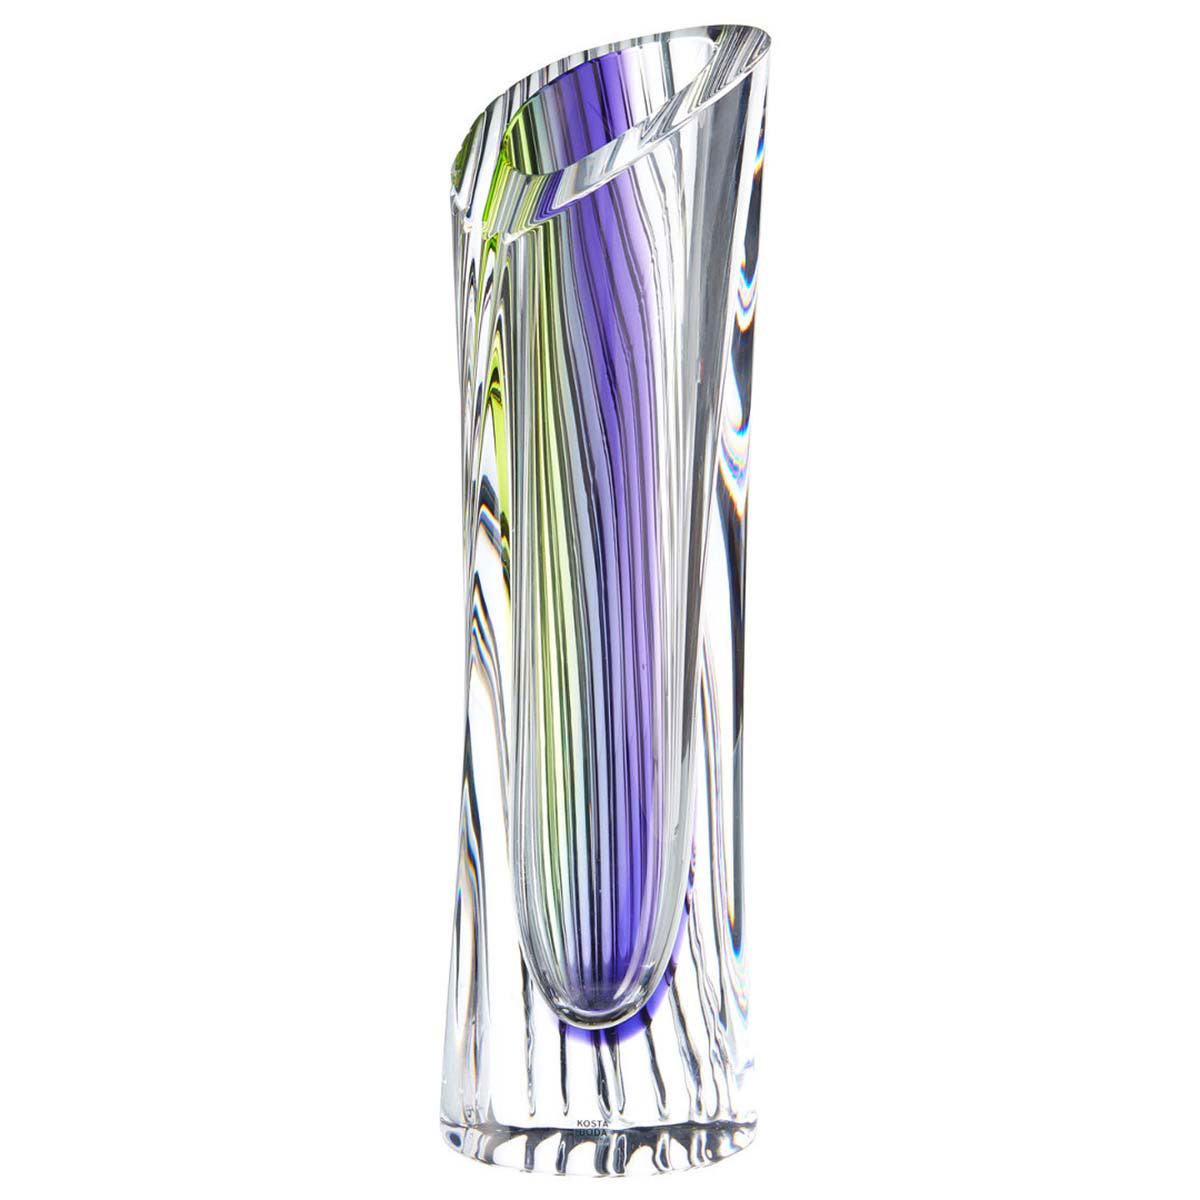 Kosta Boda Art Glass, Goran Warff Crystal Movement Green, Limited Edition of 200